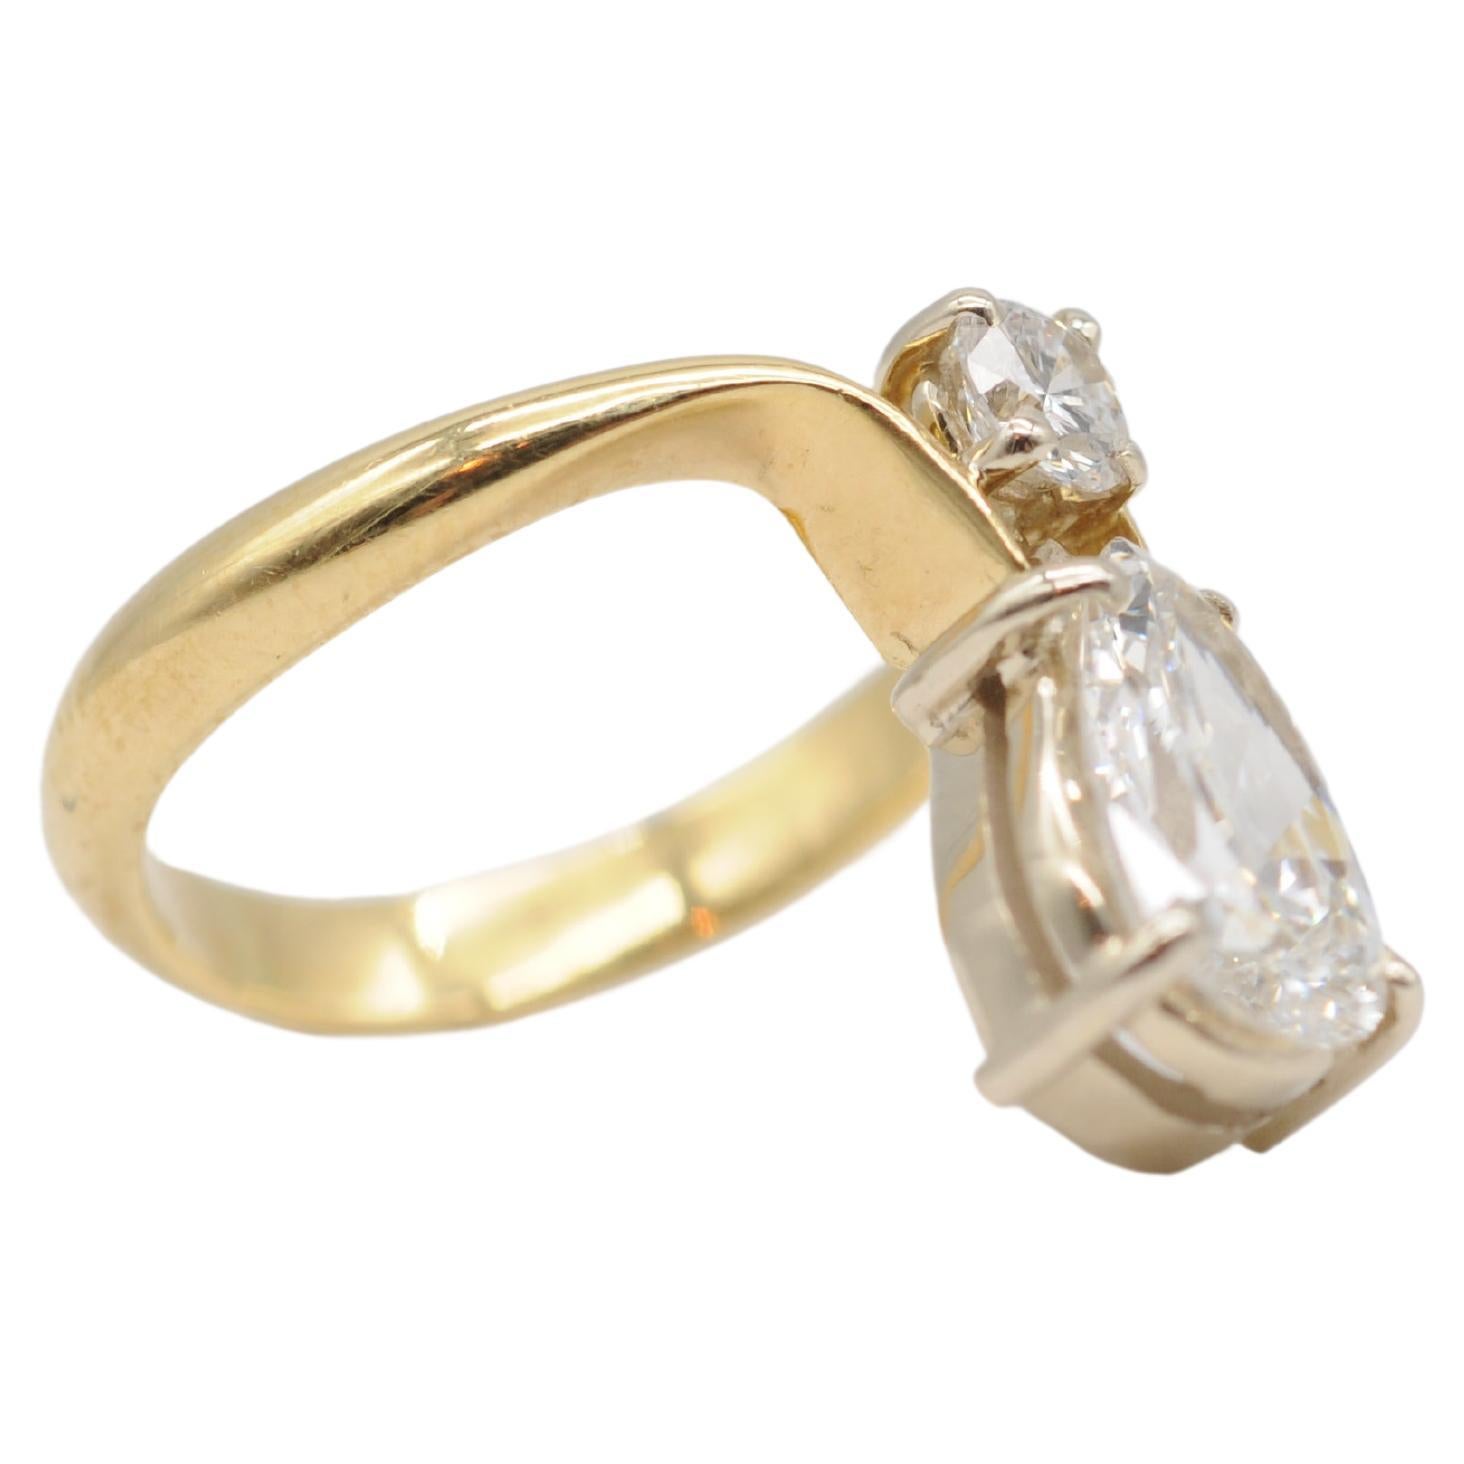 Majestic pear cut diamond engagement ring 